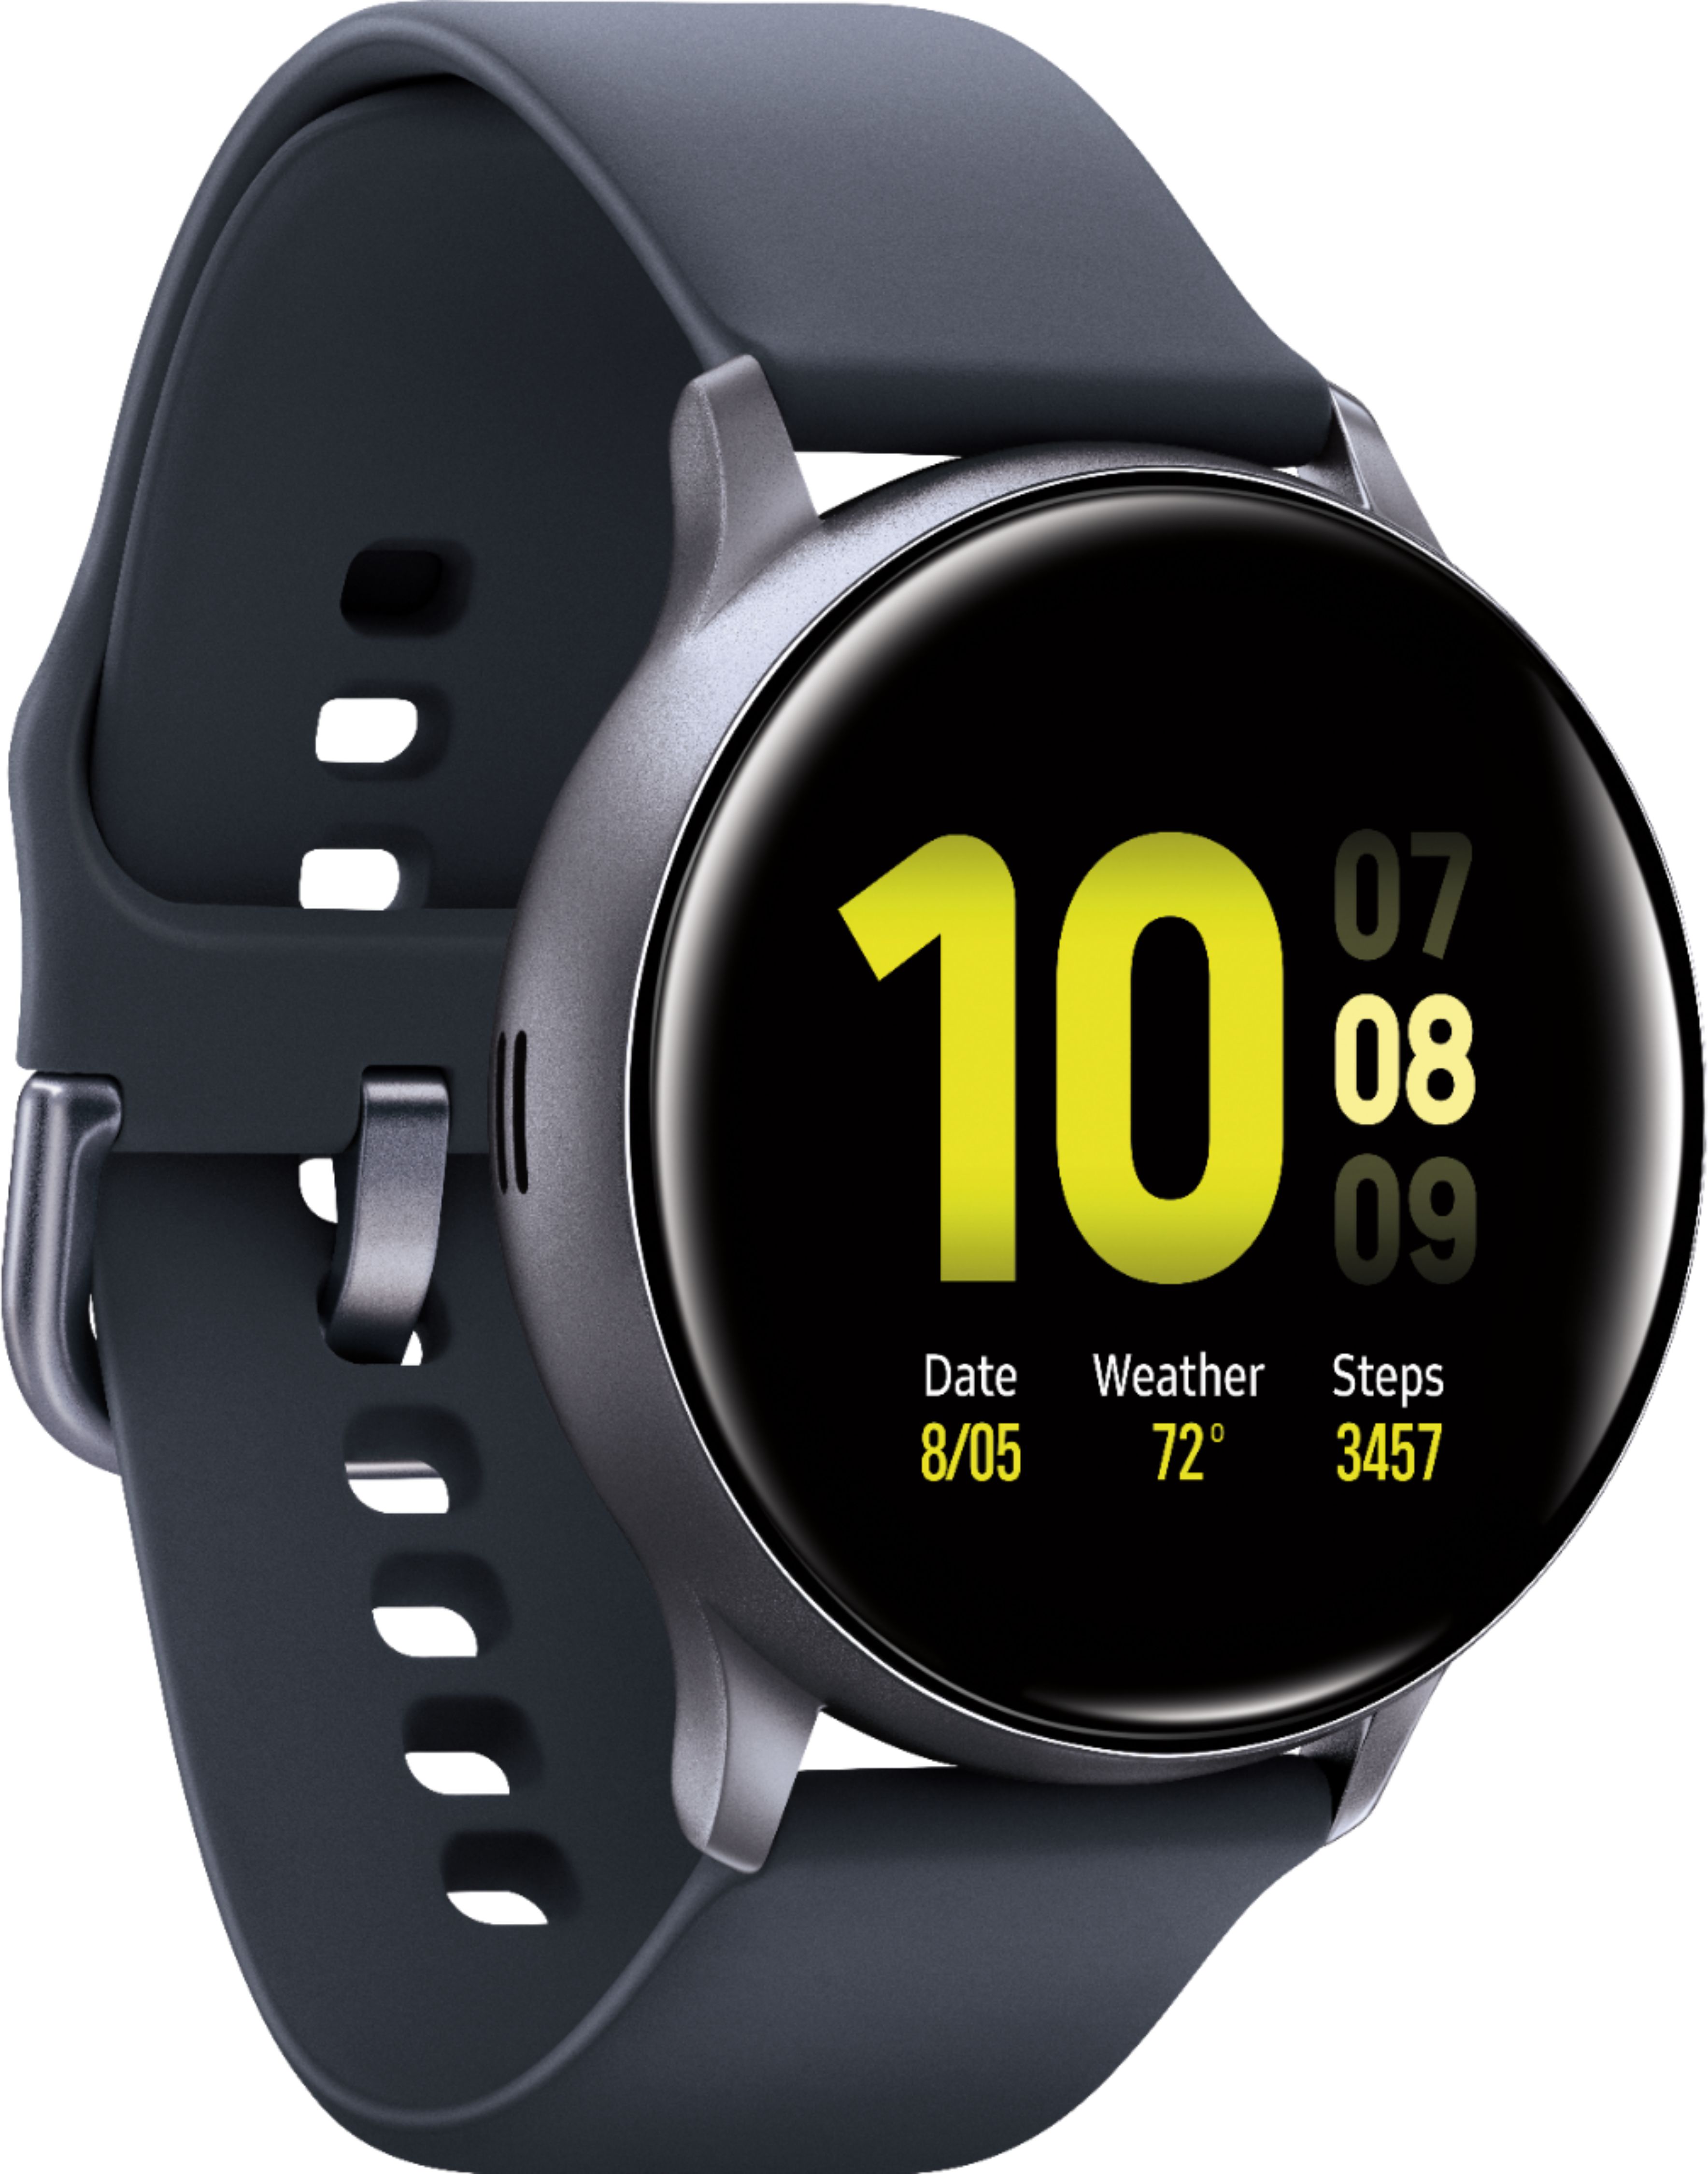 Angle View: Samsung - Geek Squad Certified Refurbished Galaxy Watch Active2 Smartwatch 40mm Aluminum - Aqua Black